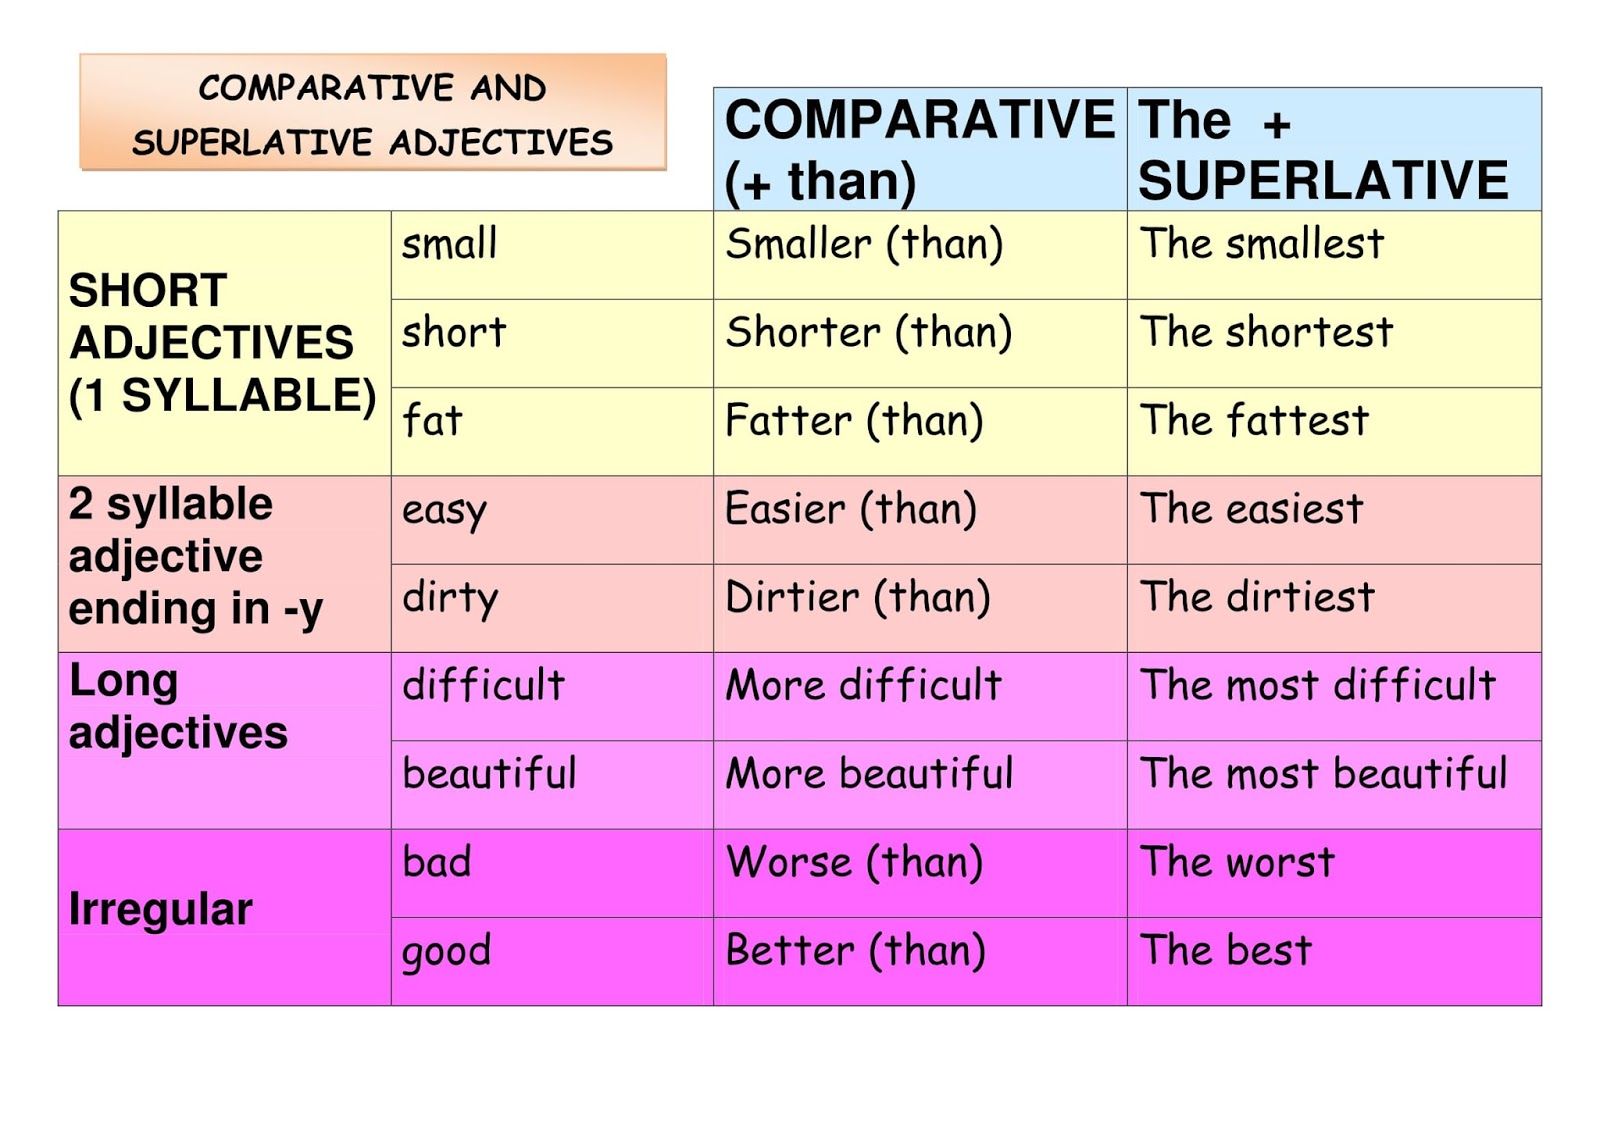 Comparatives long adjectives. Superlative adjectives правило. Таблица Comparative and Superlative. Comparative and Superlative forms of adjectives. Comparative and Superlative adjectives правило.